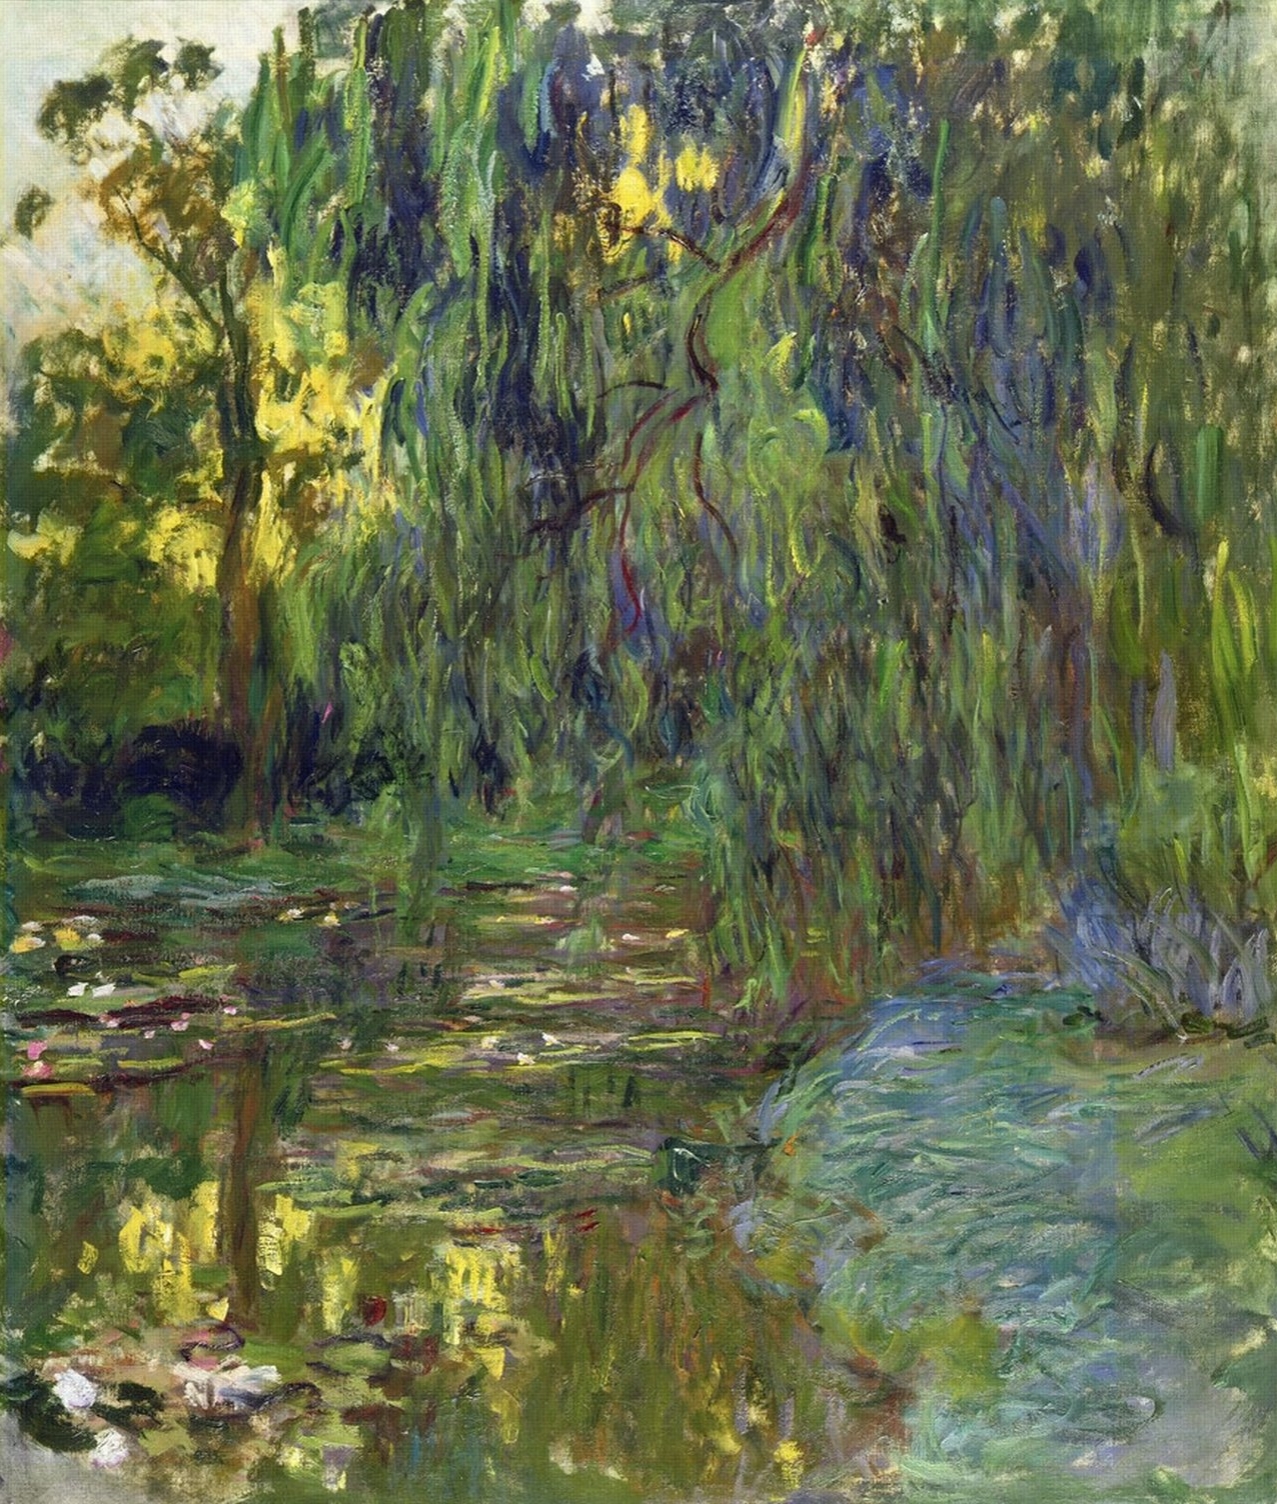 Claude+Monet-1840-1926 (953).jpg